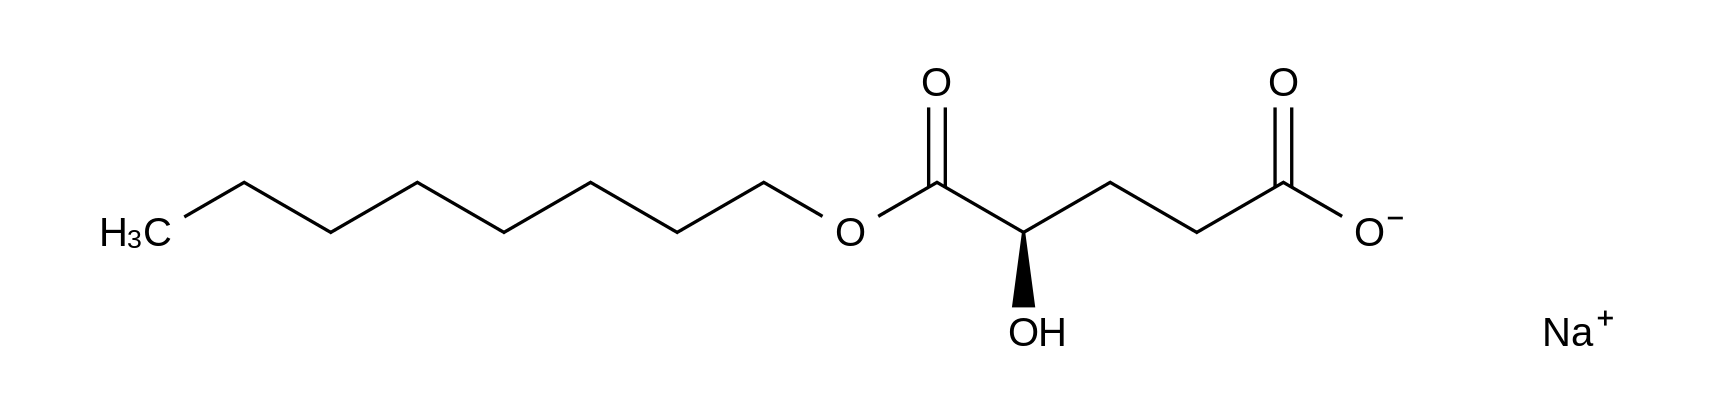 (2R)-2-Hydroxyglutaric acid octyl ester sodium salt